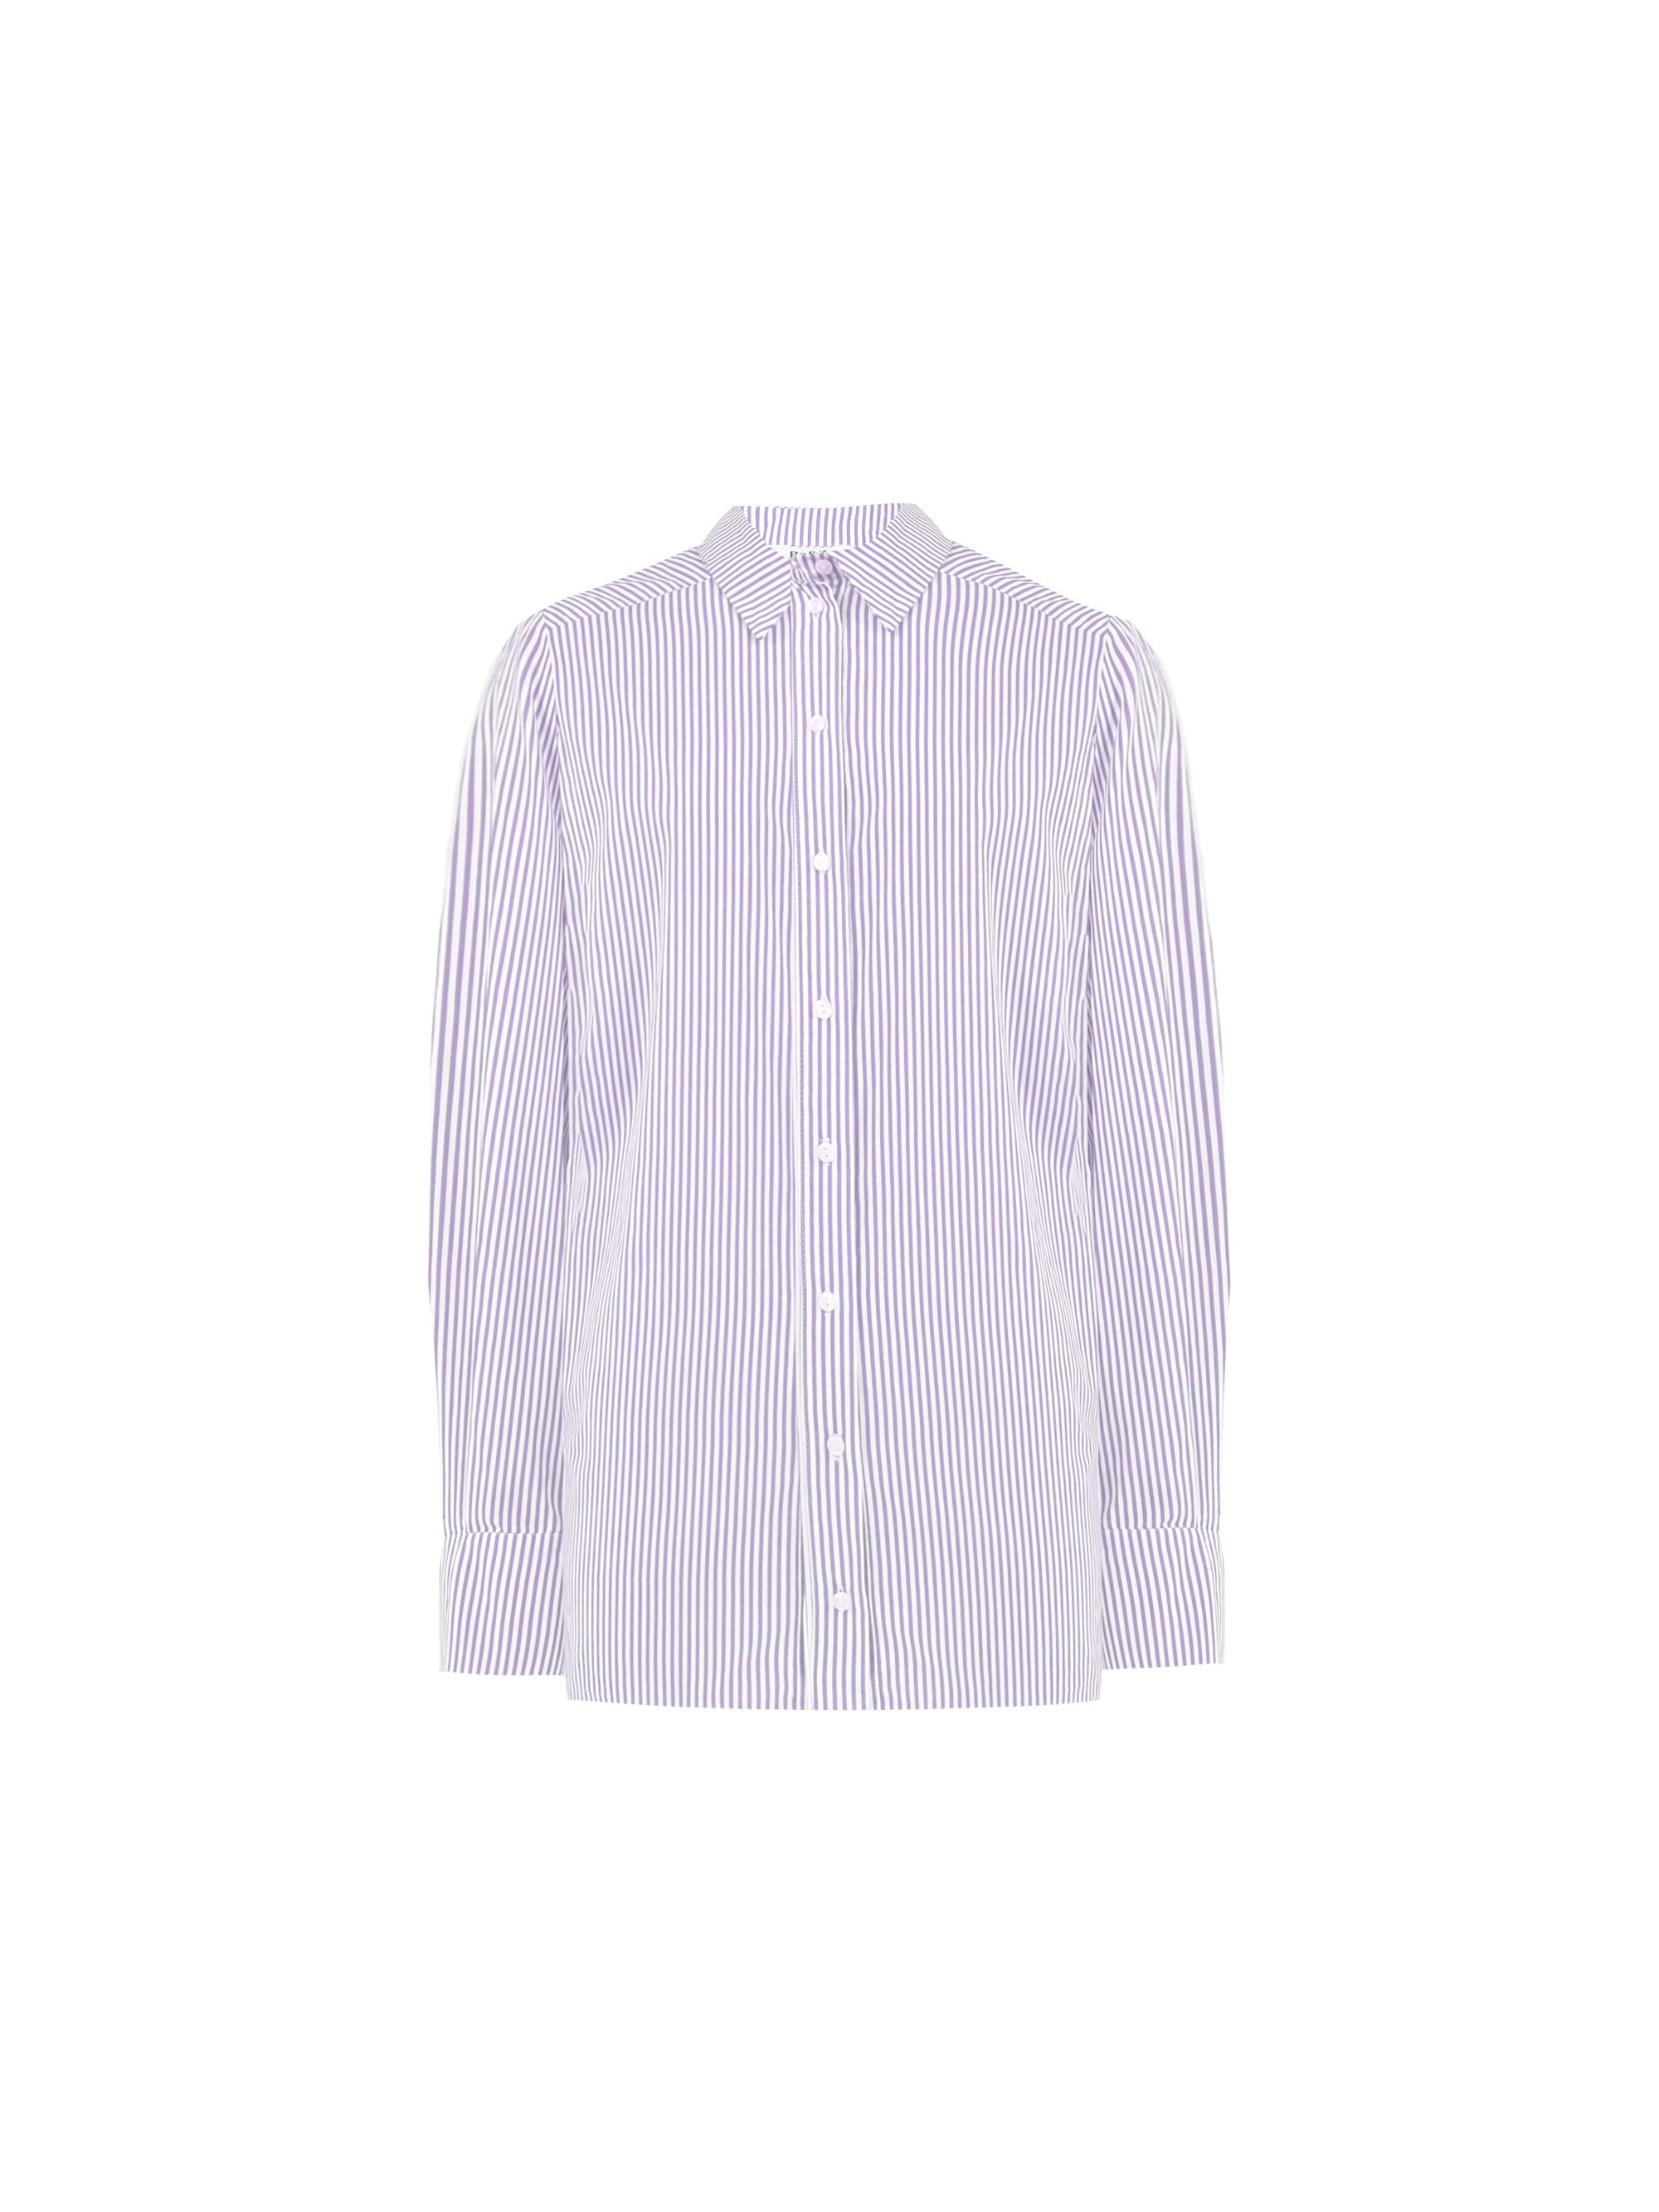 Friday pinstripe cotton shirt